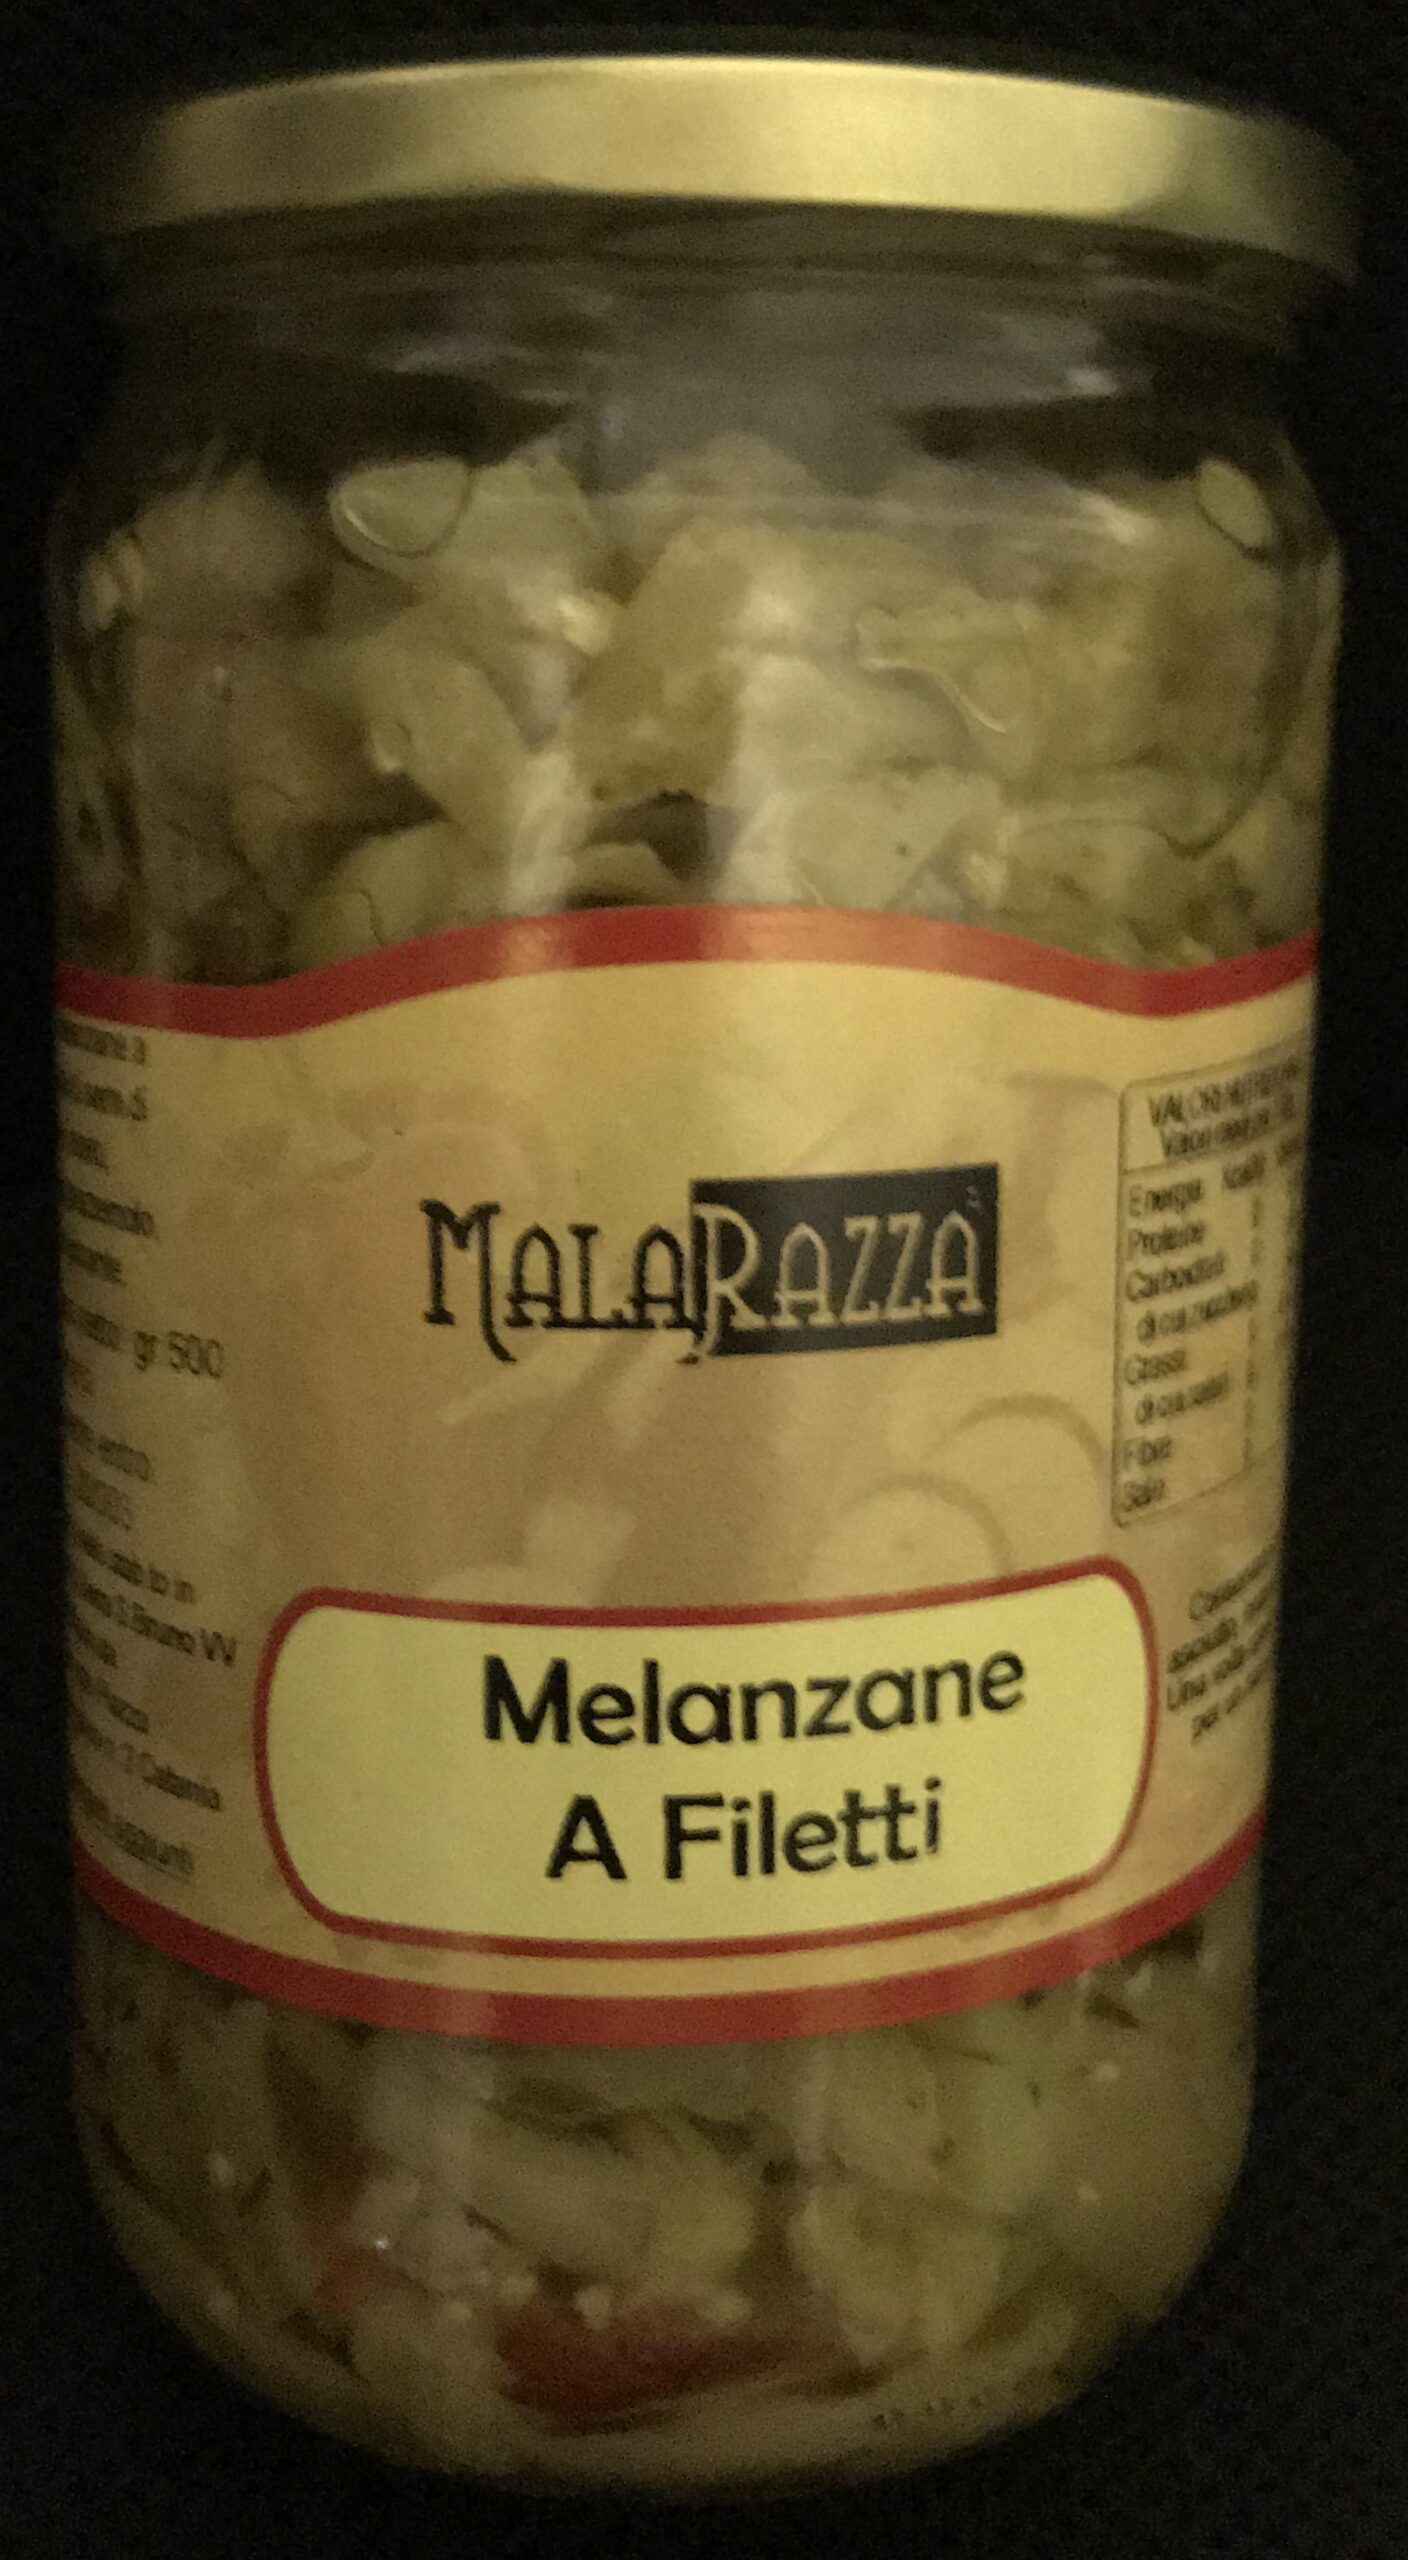 malarazza food made in italy melanzane-a-filetti